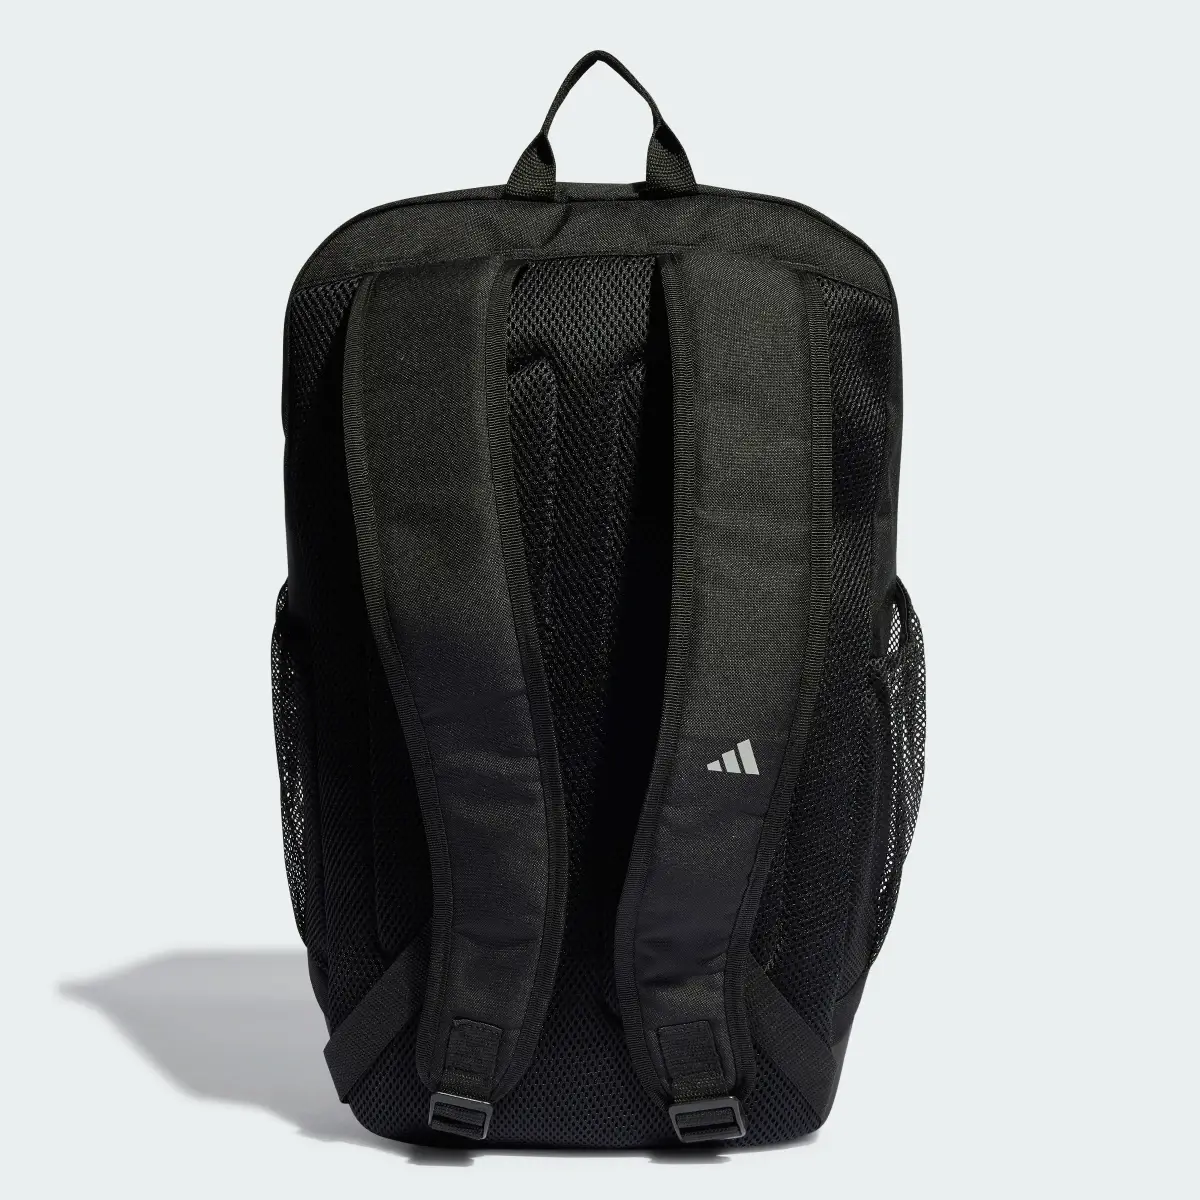 Adidas Ajax Amsterdam Backpack. 3